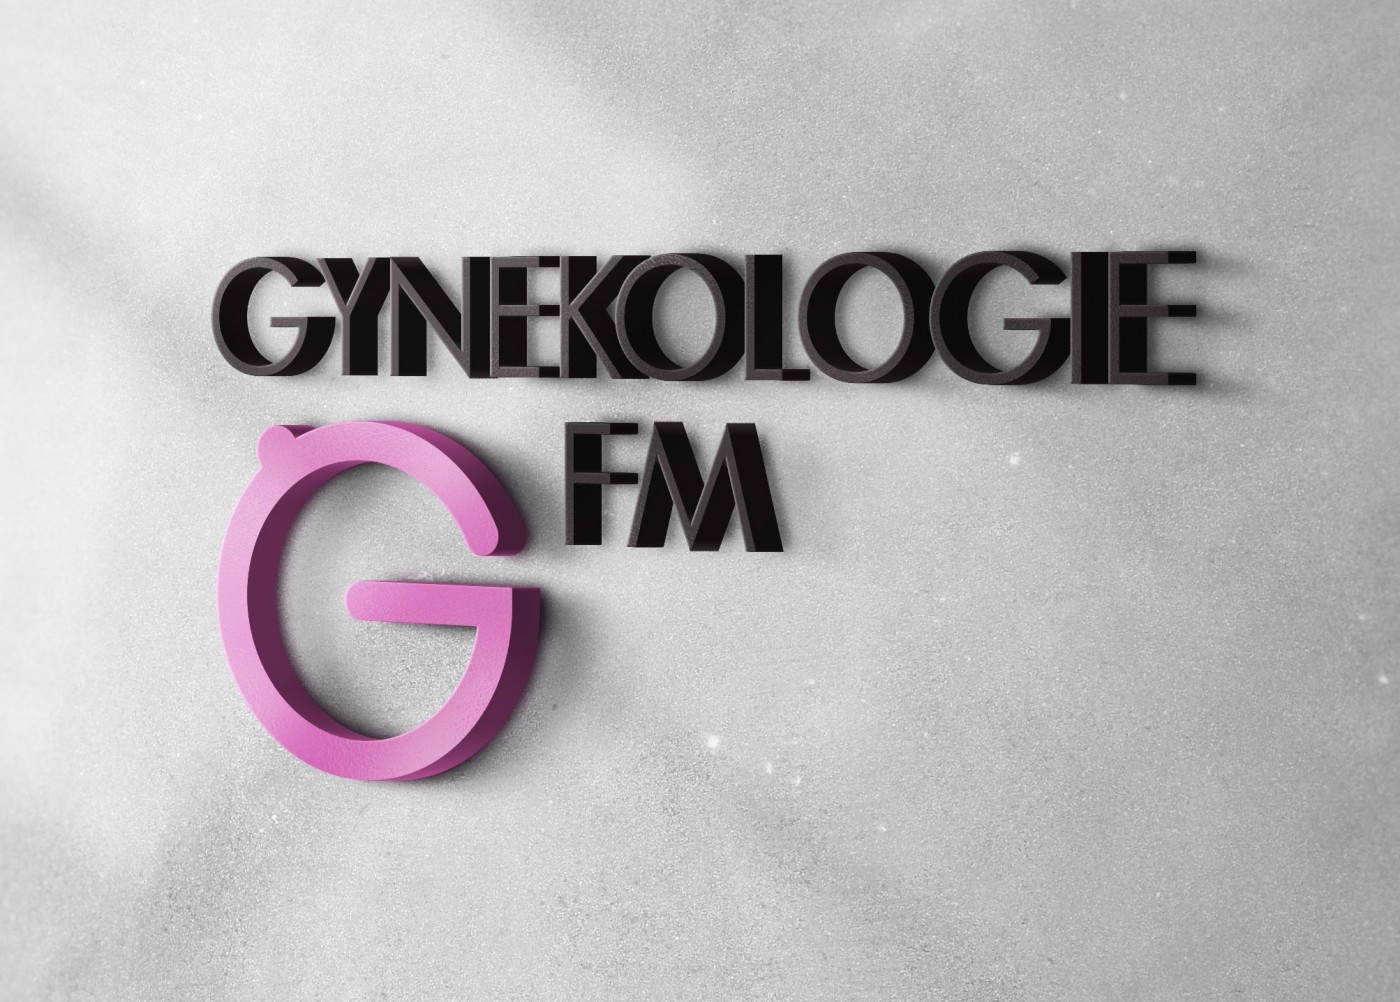 Gynekologie FM - výroba logotypu